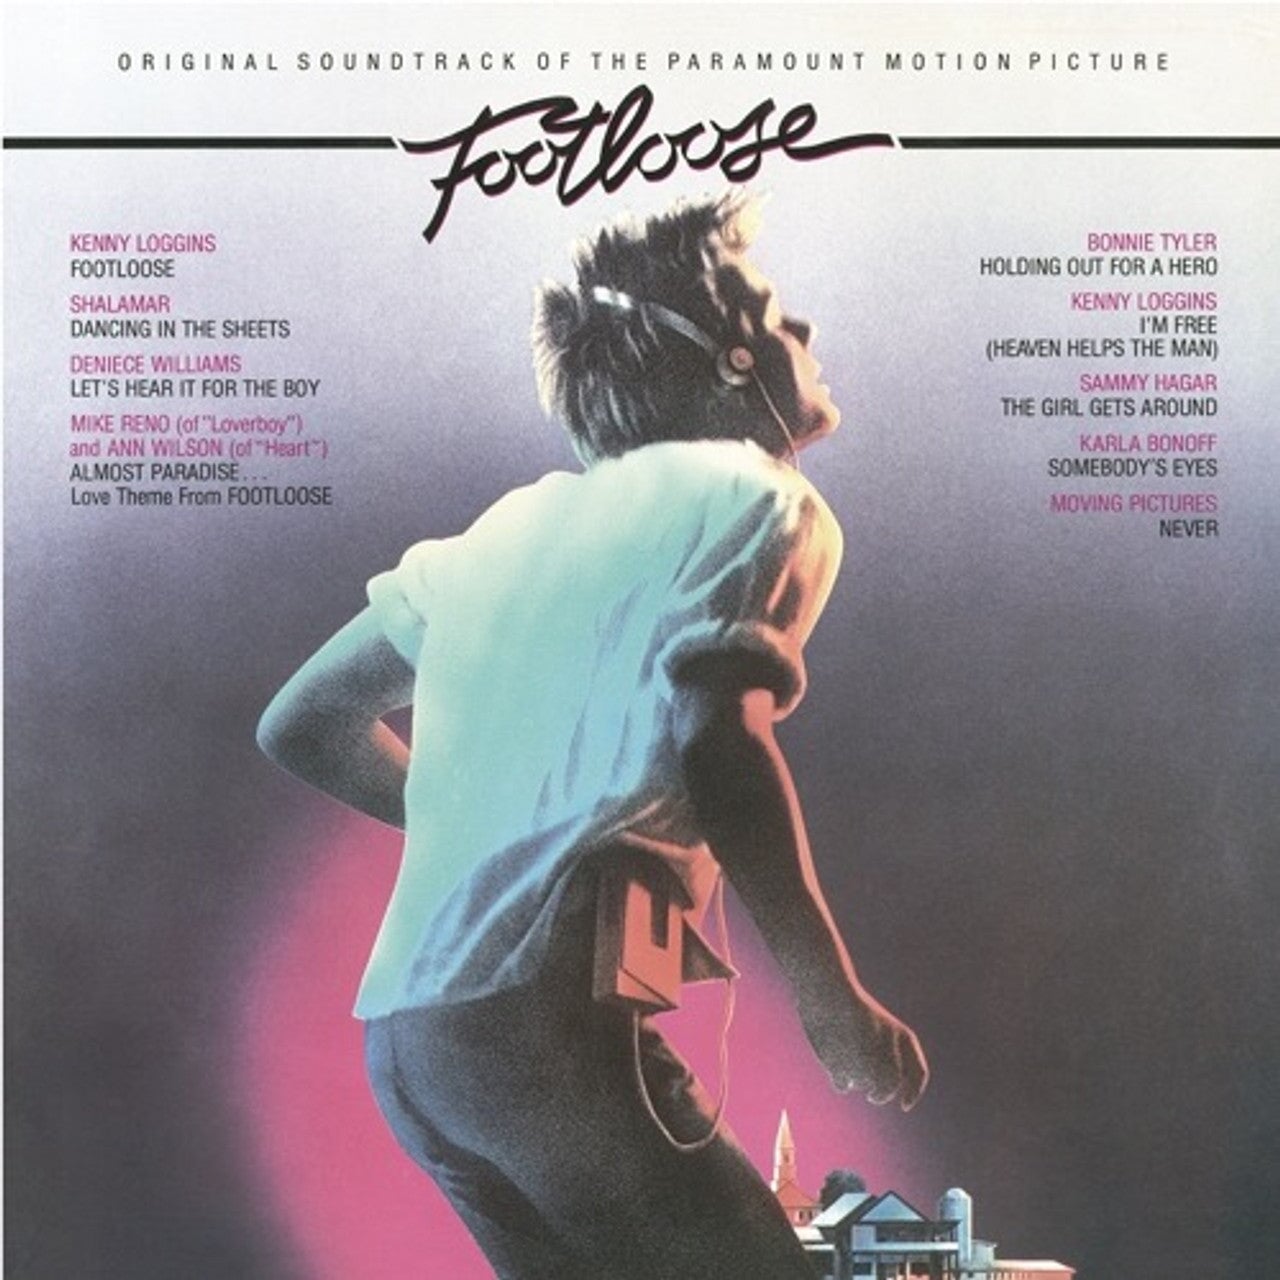 Footloose (Original Soundtrack) (Vinyl LP)